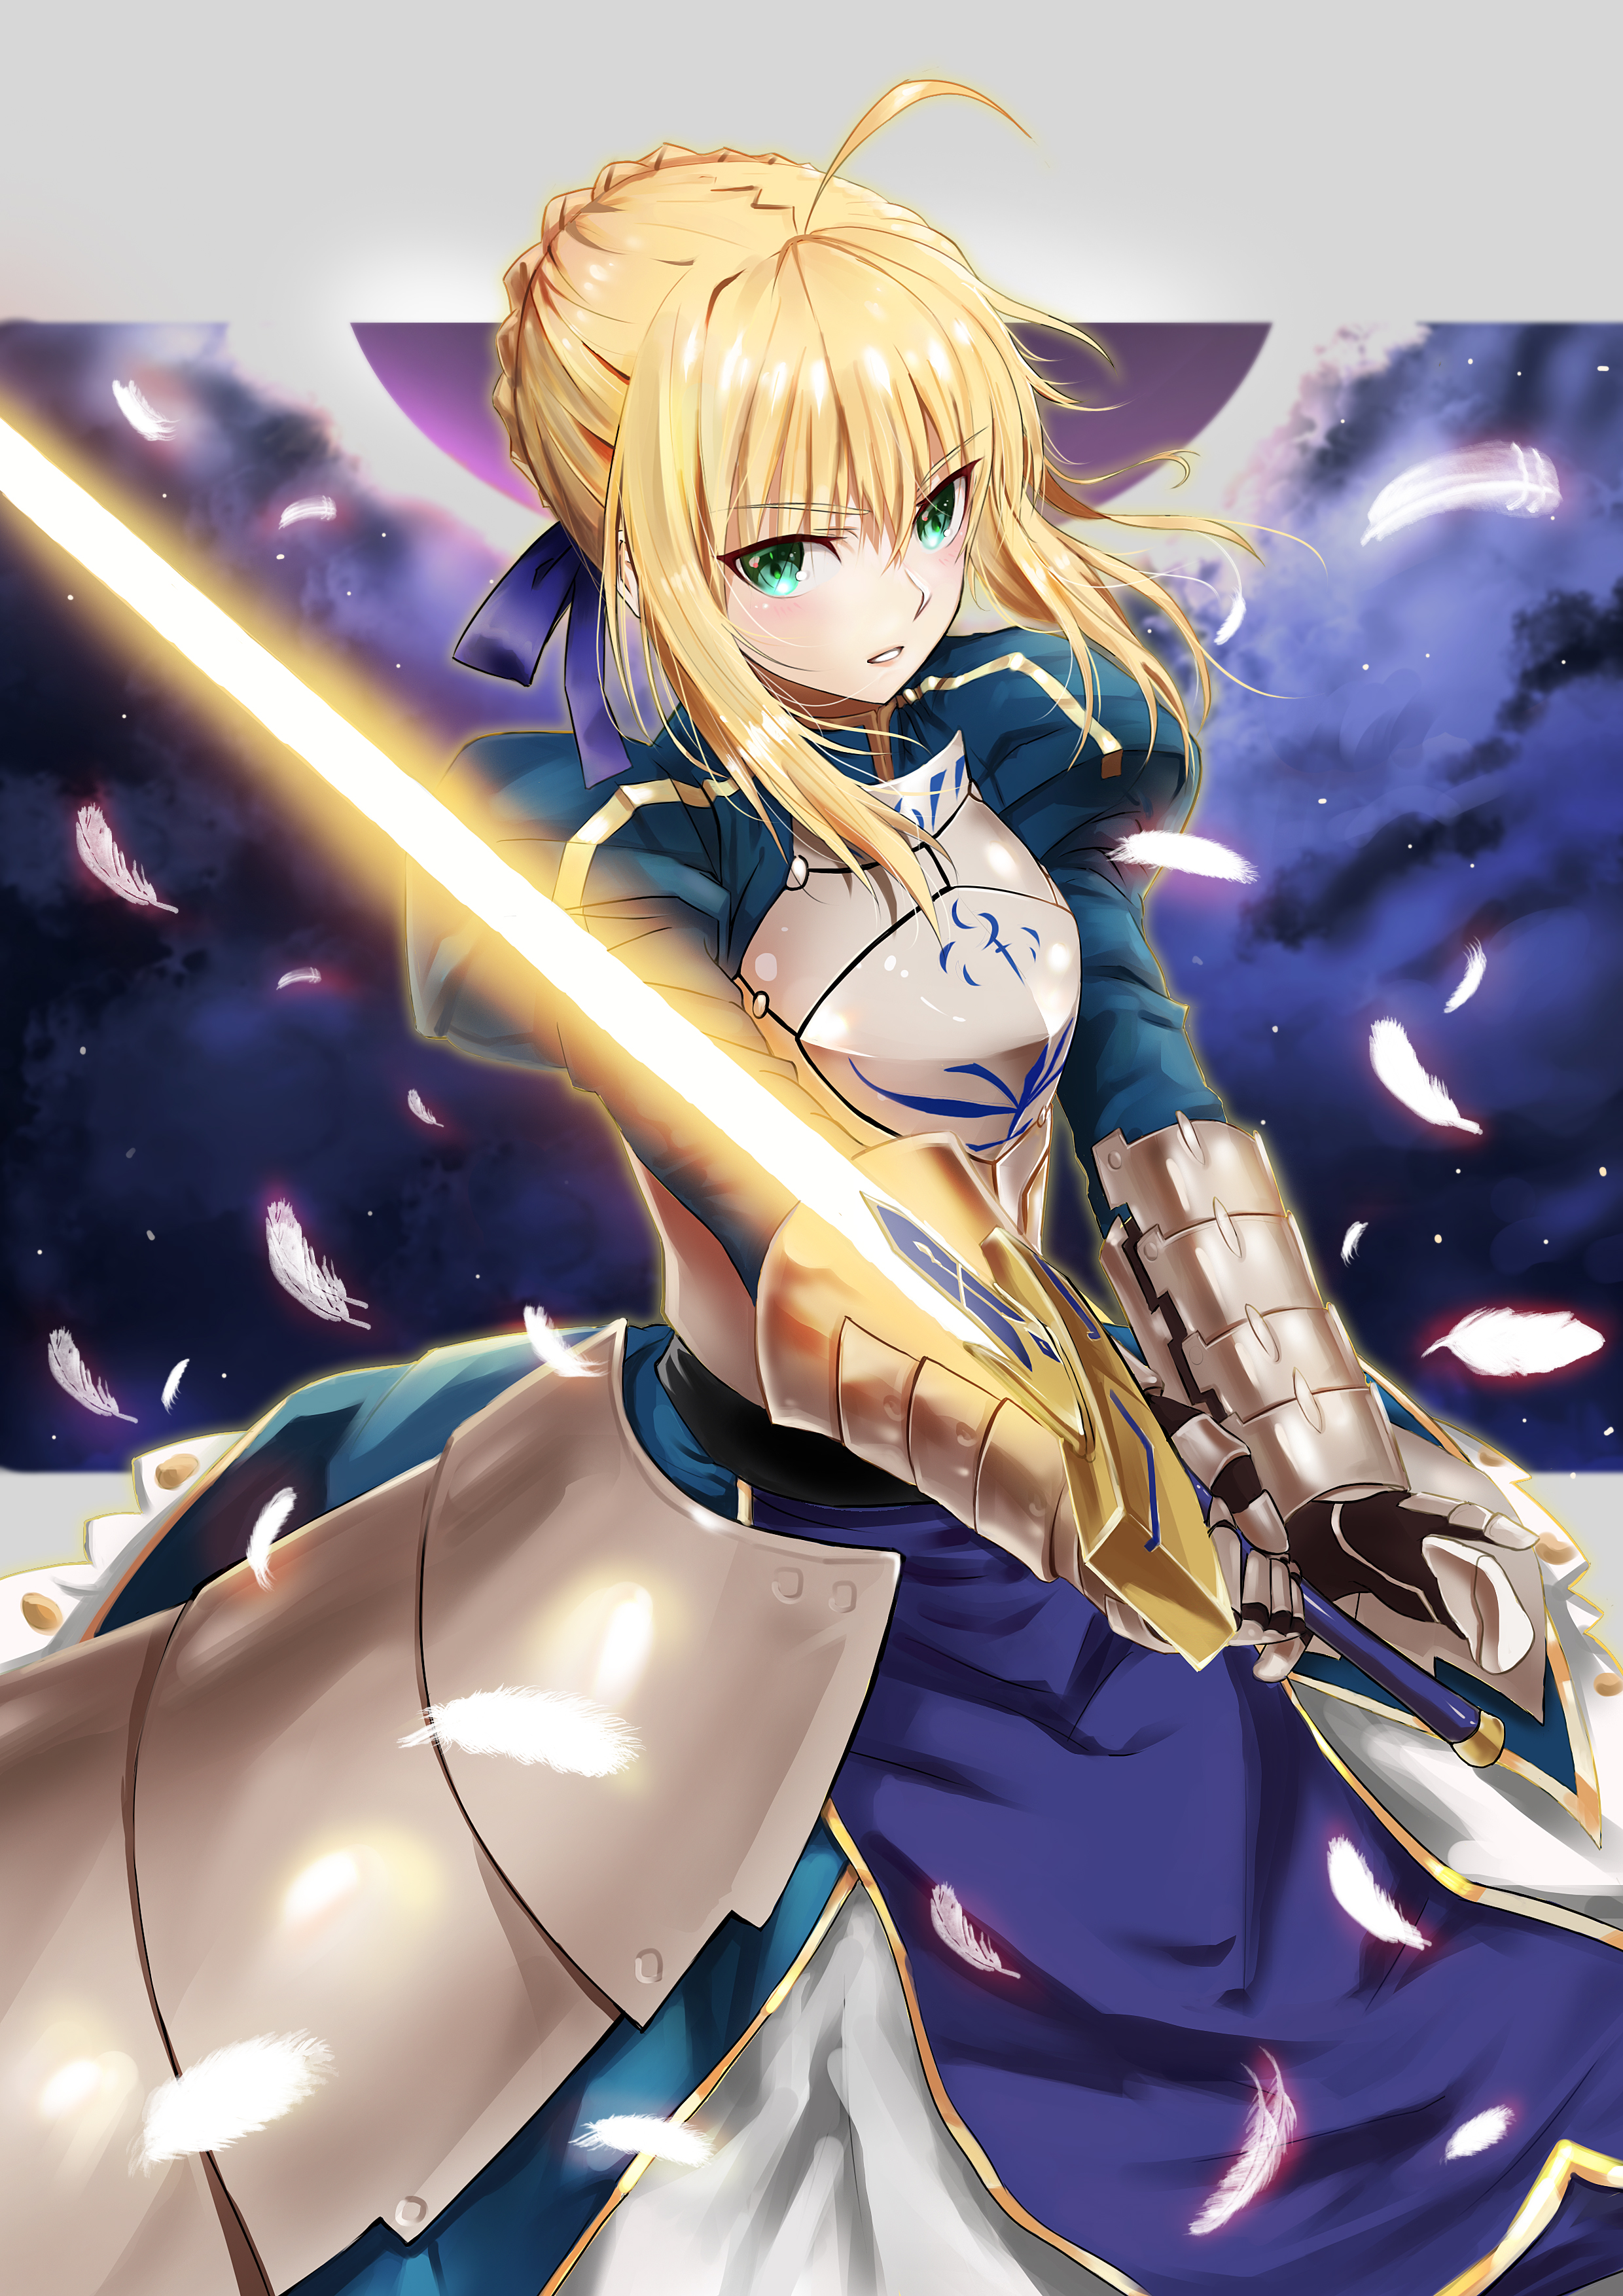 Anime 2480x3508 anime anime girls knight armor blonde Excalibur Artoria Pendragon Saber Fate series Fate/Stay Night Fate/Grand Order artwork digital art